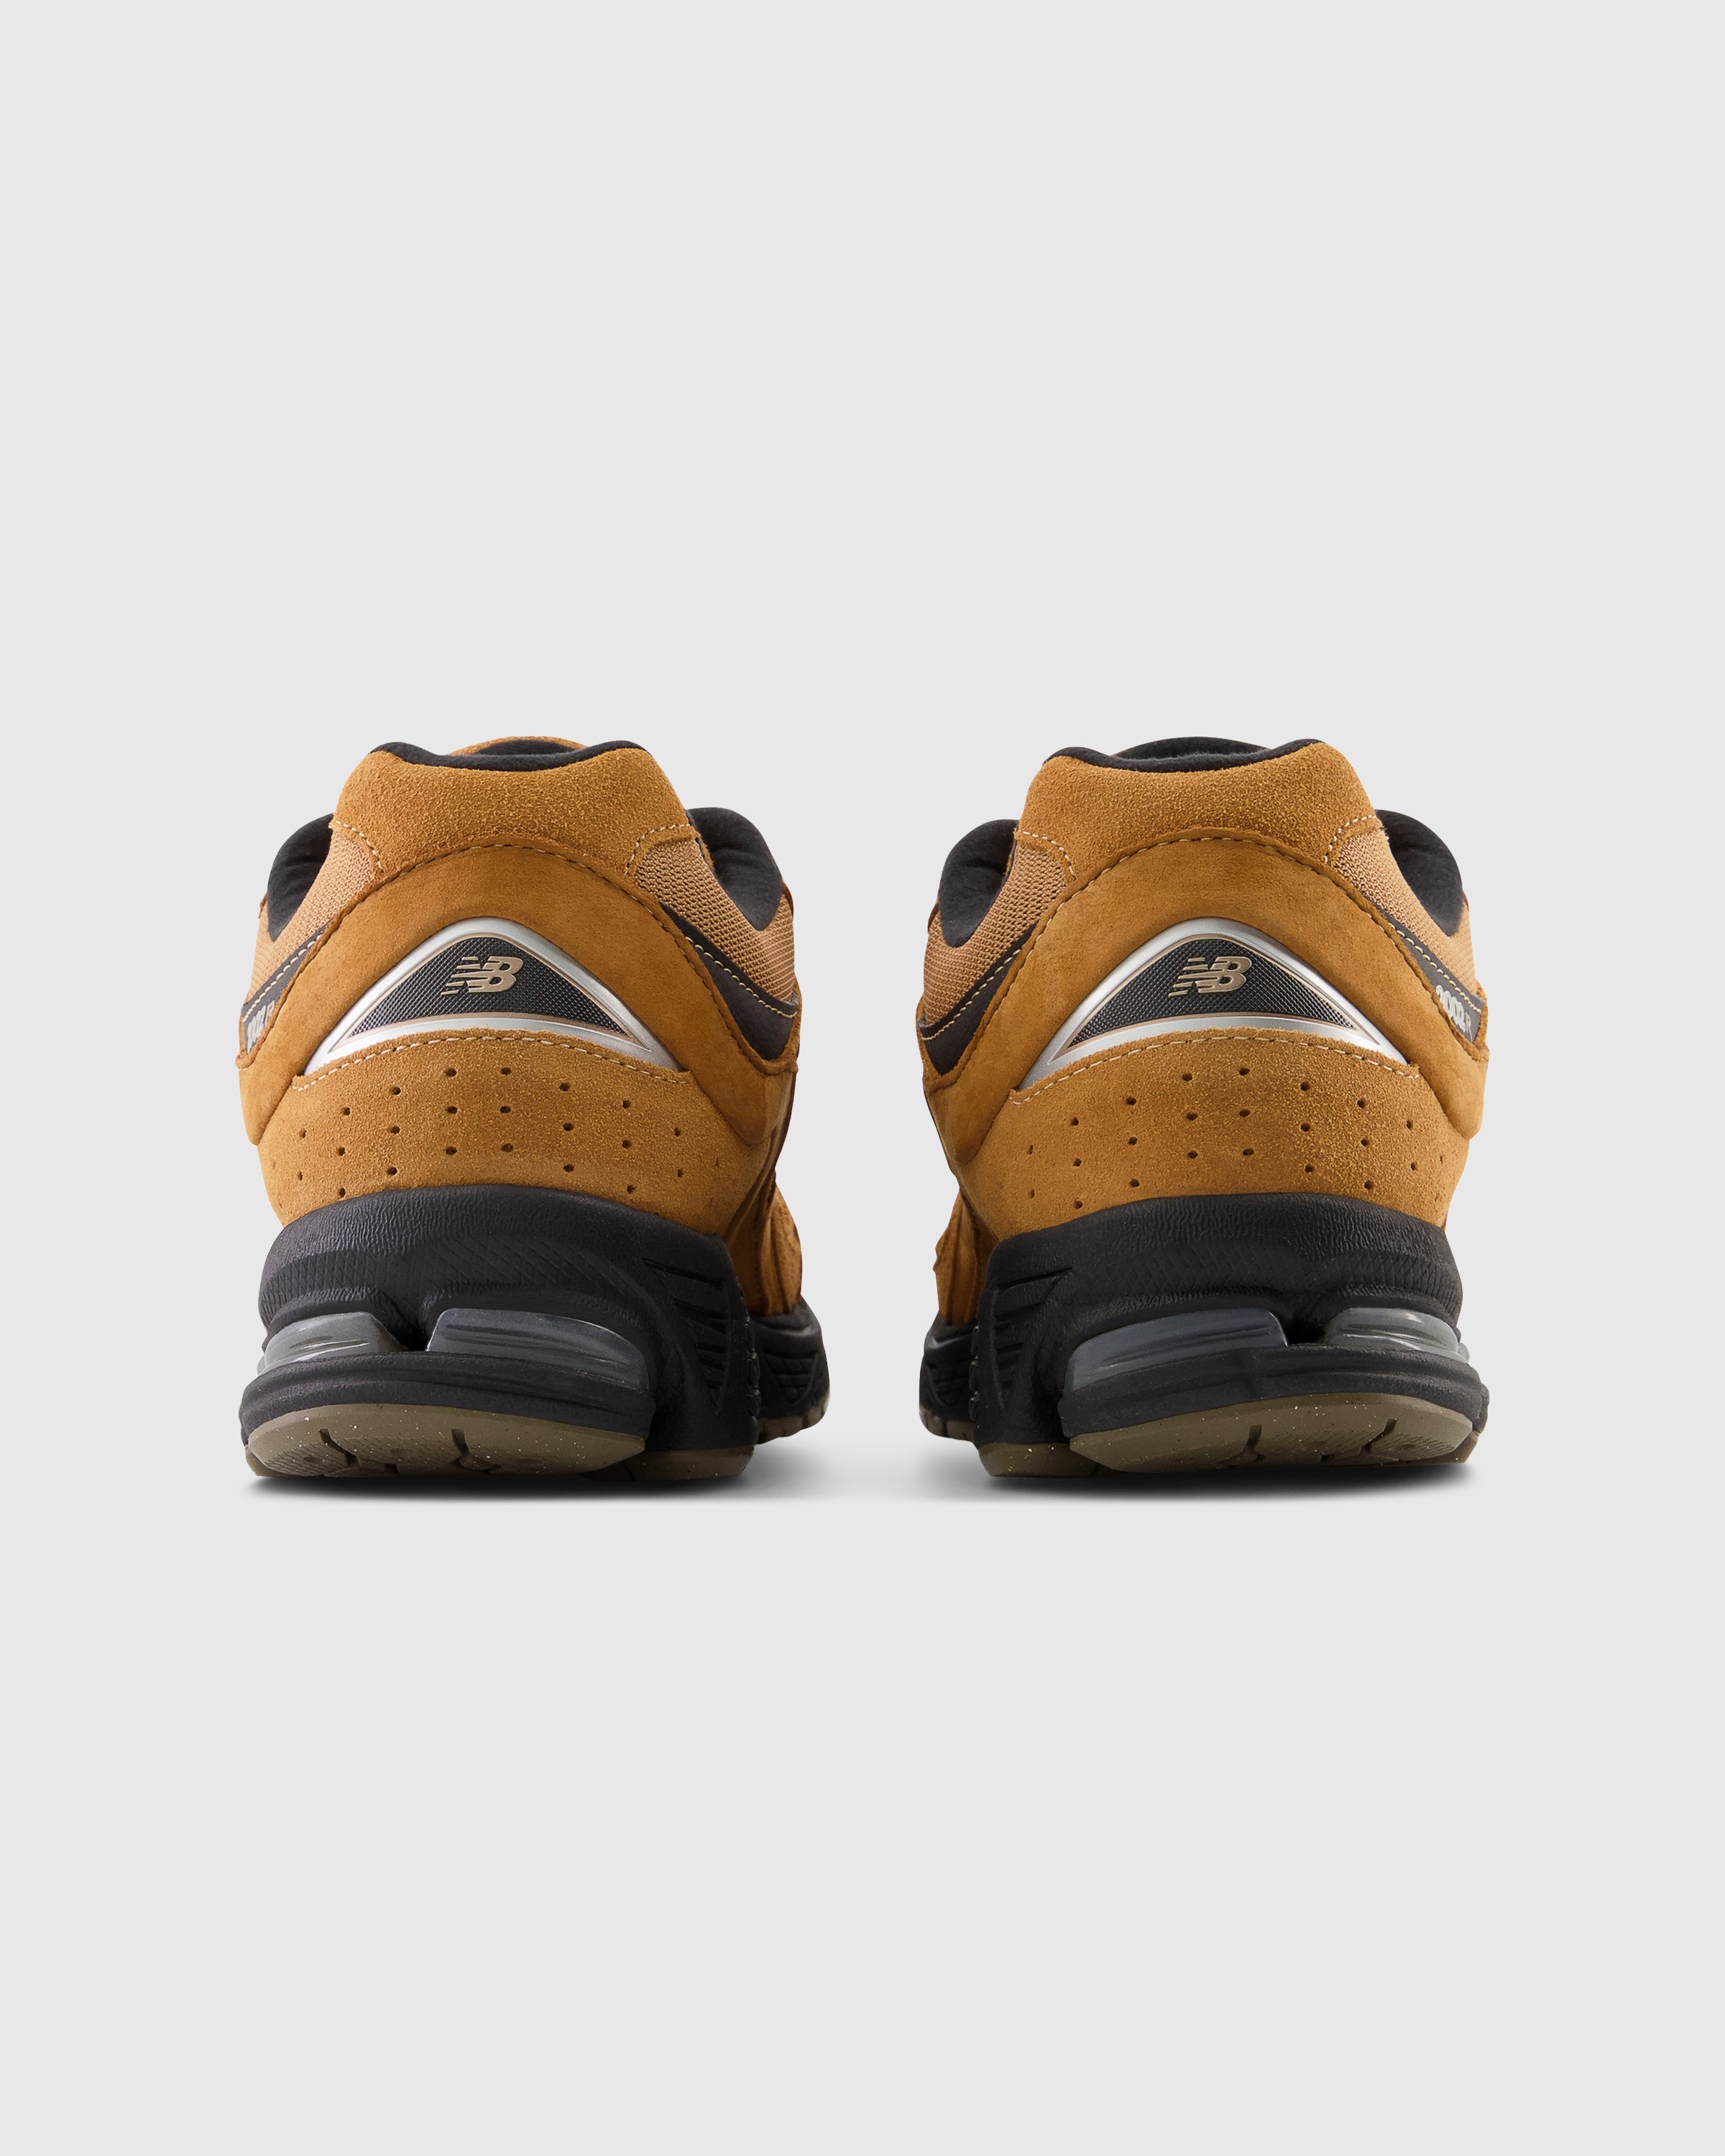 New Balance - M 2002 REI Tobacco - Footwear - Brown - Image 4